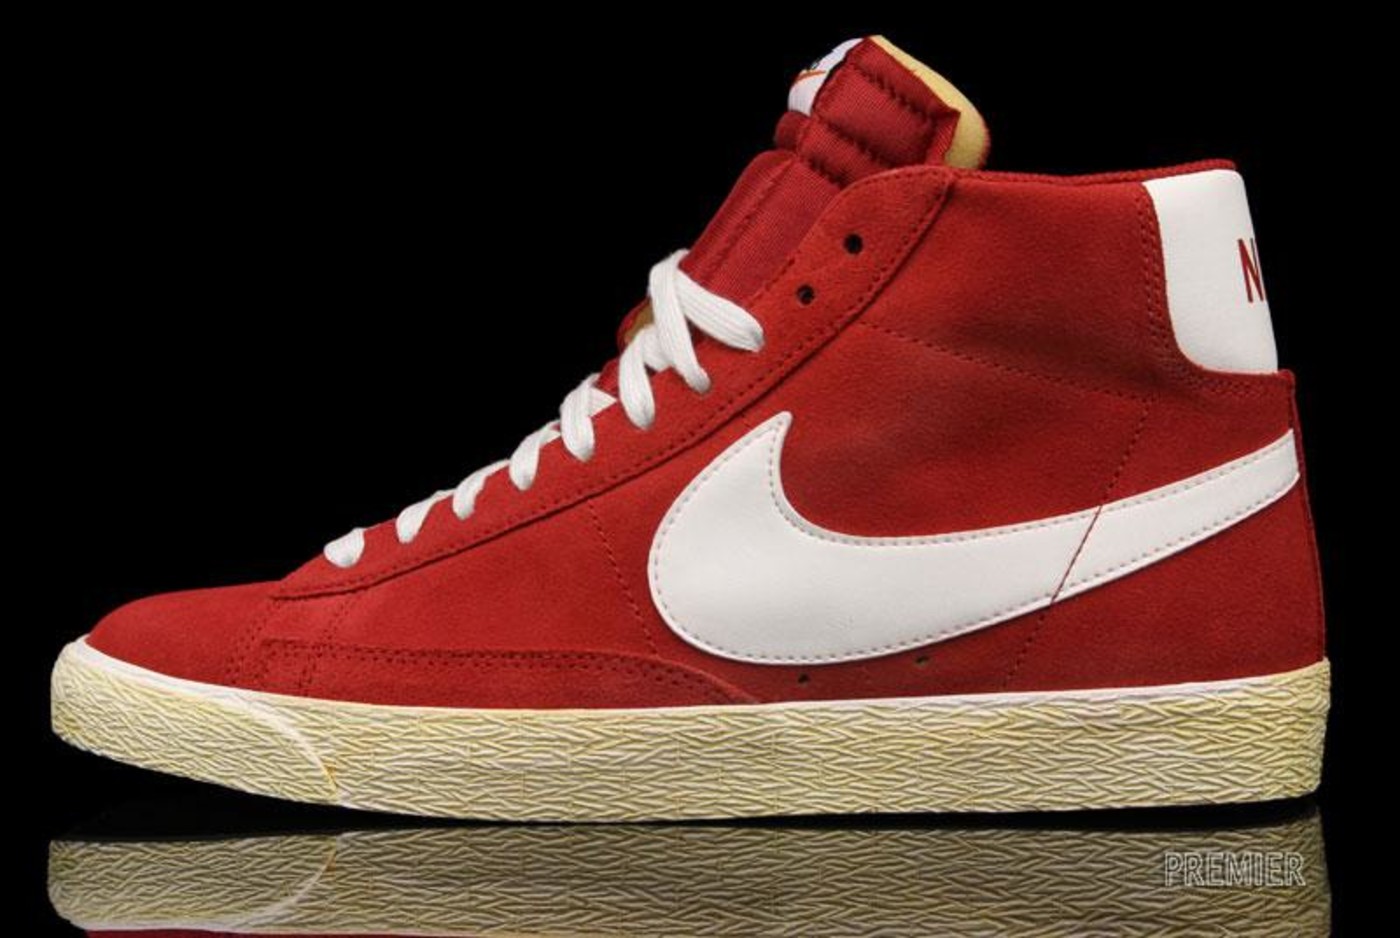 Kicks of the Day: Nike Blazer High “Red 